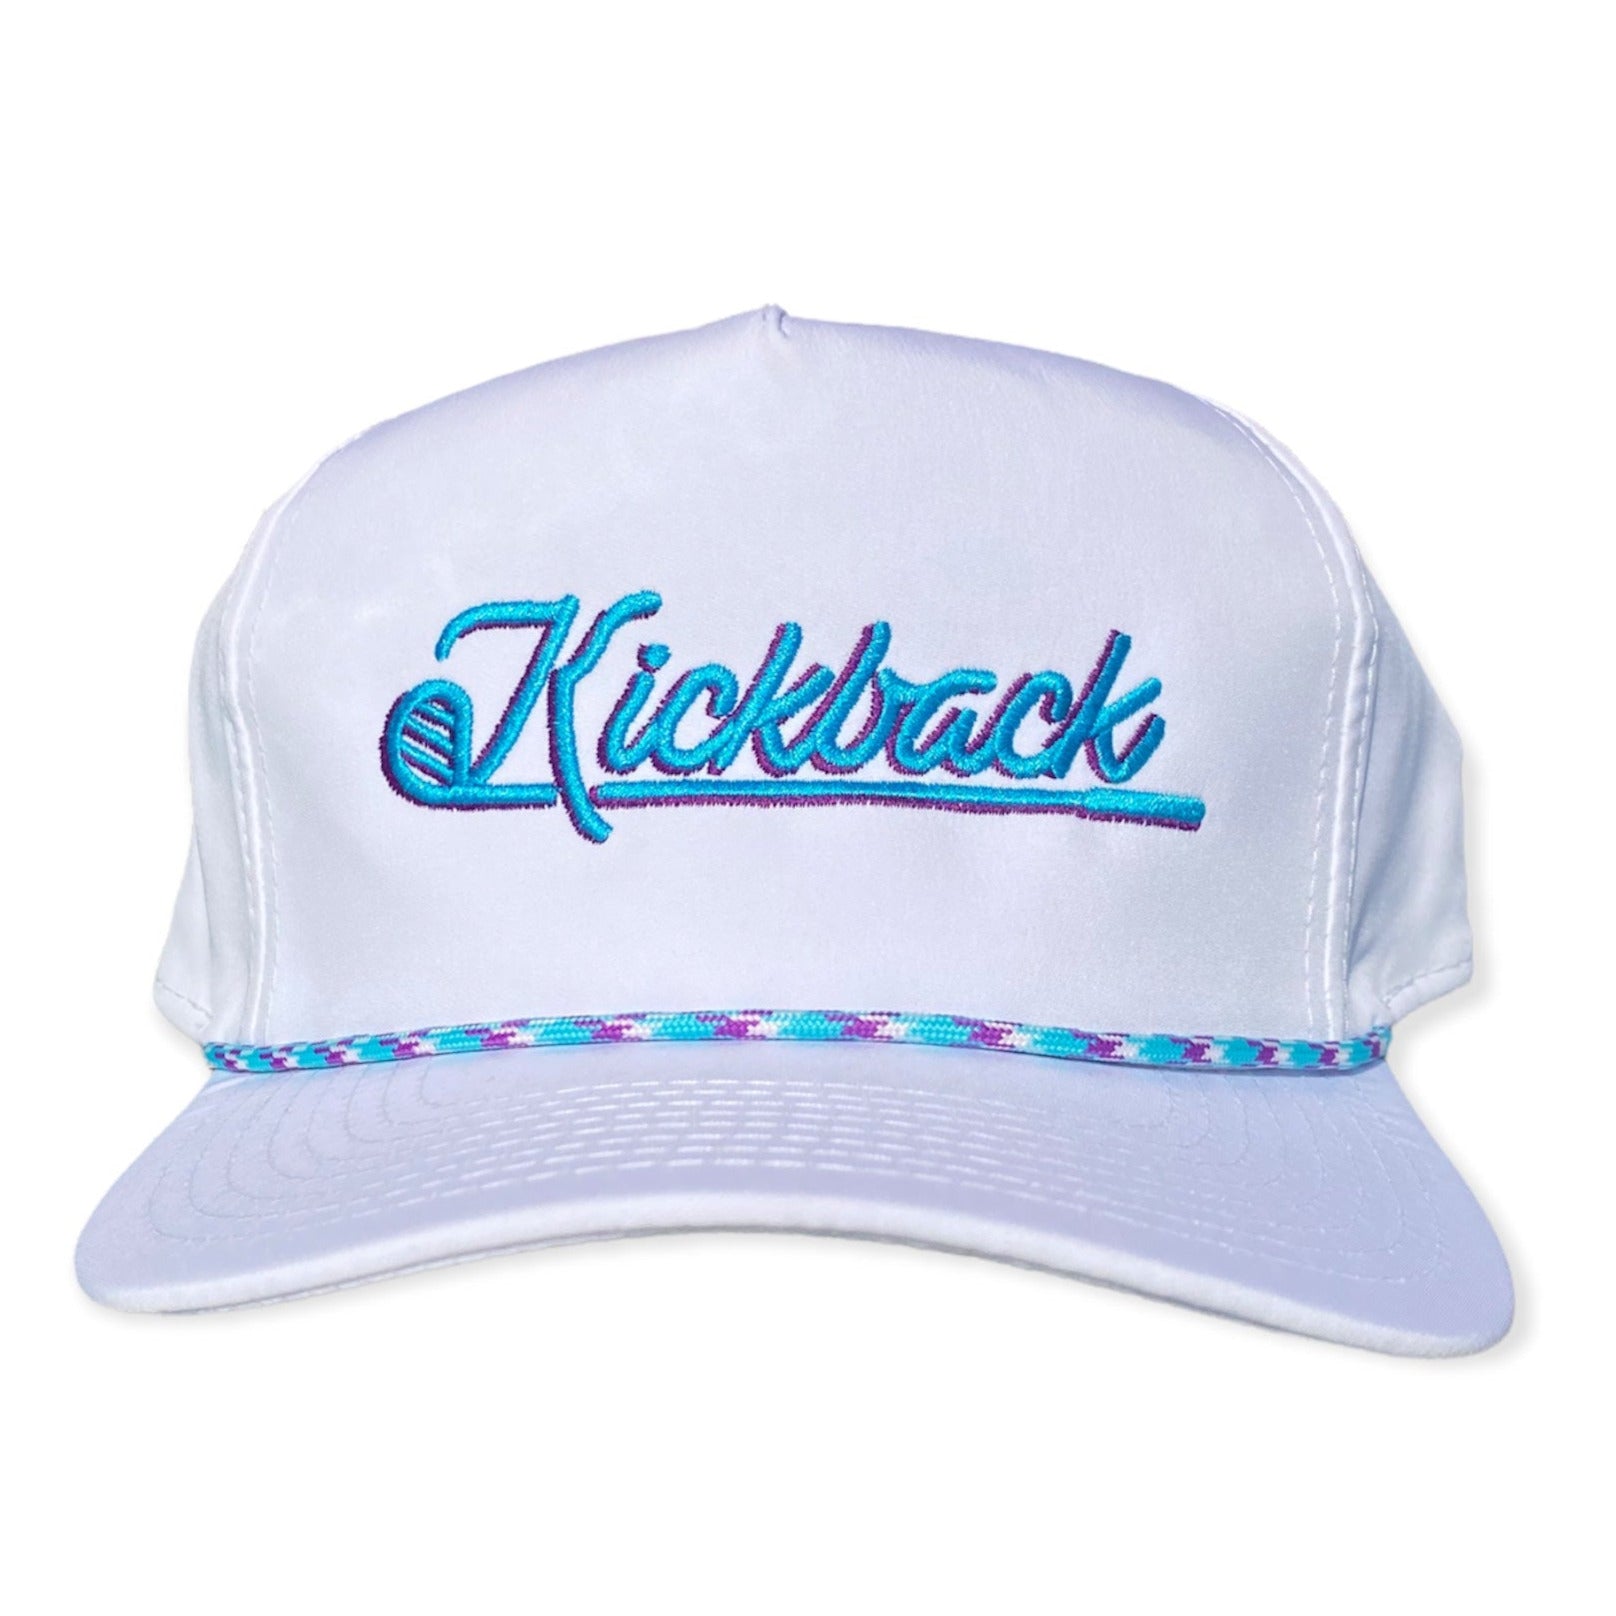 Go Fish(Fish Hook Ques Mark) White Emb. Royal Blue Hat Cap Strap buckle EUC  - Siprem